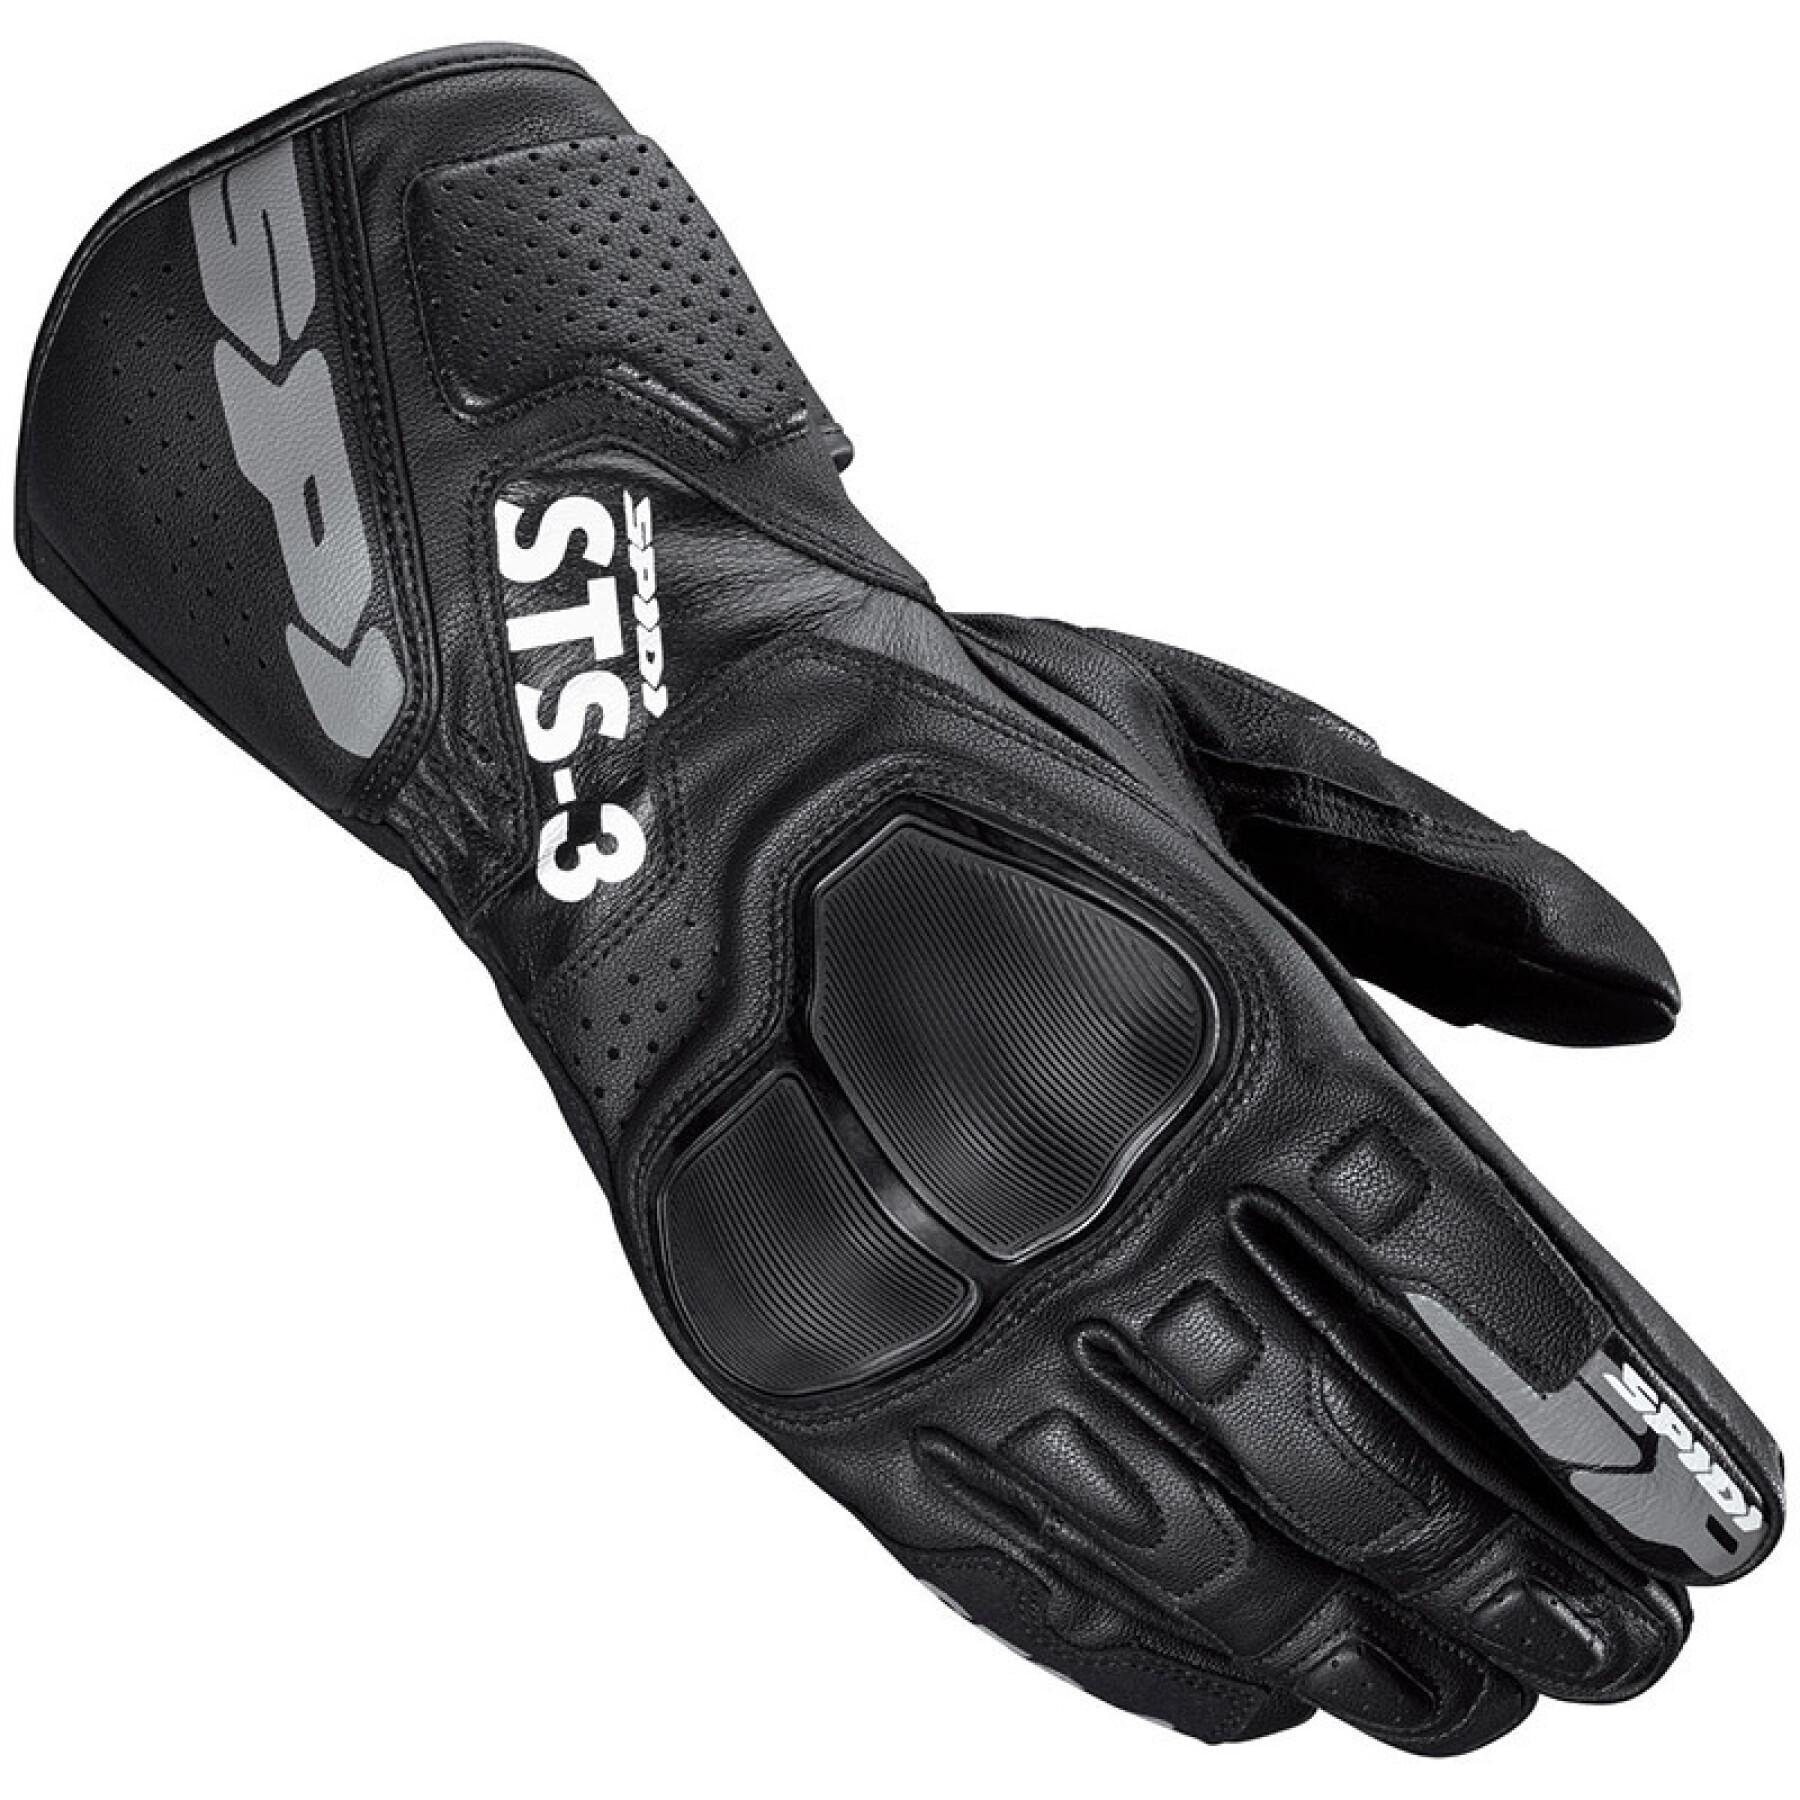 Women's all-season motorcycle gloves Spidi sts-3